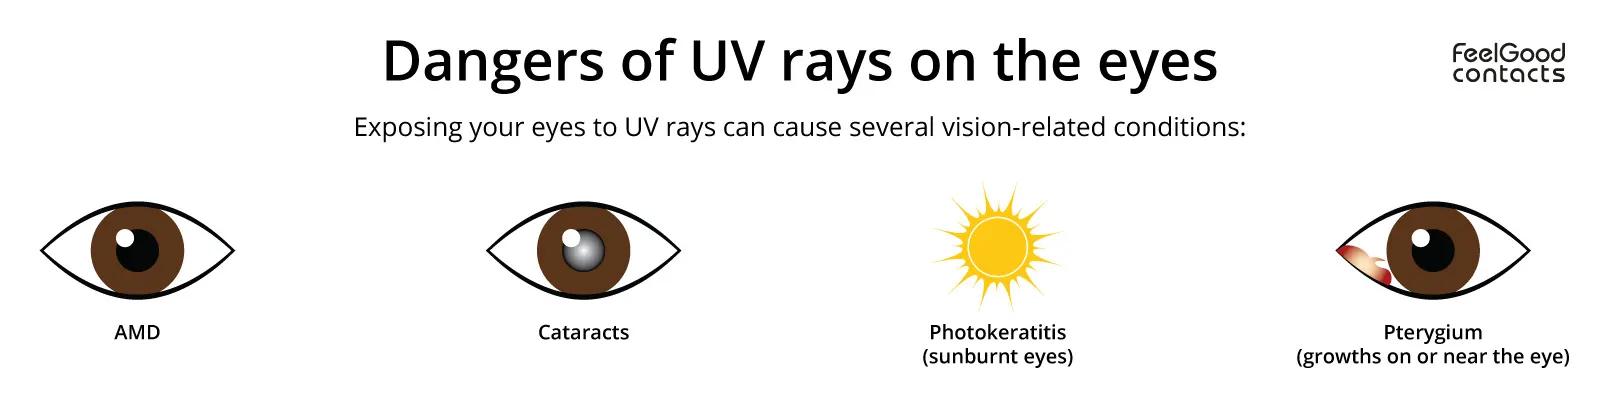 dangers of uv rays on the eyes